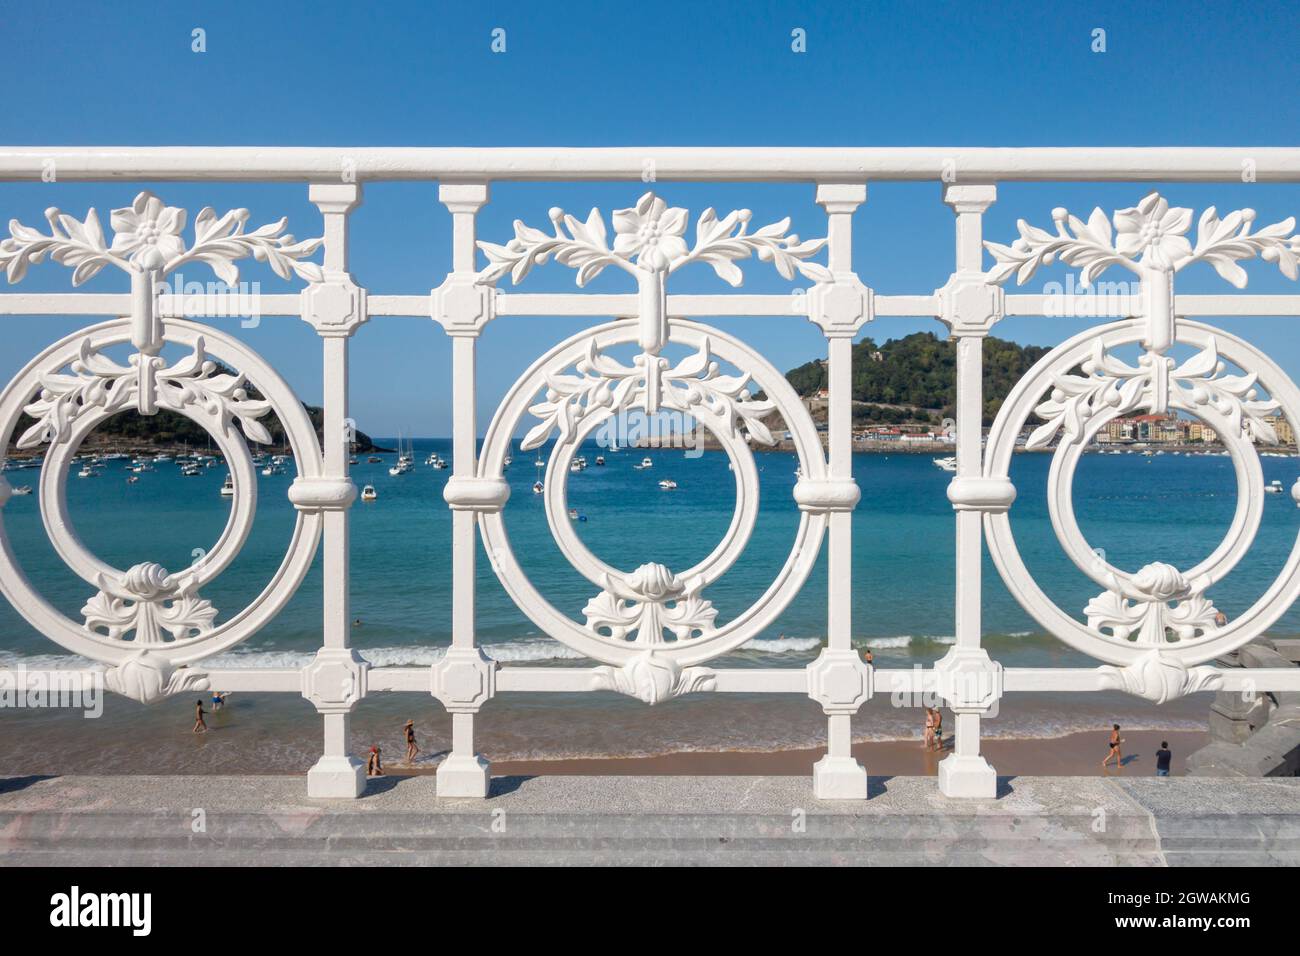 Ikonische Balustrade am Strand von La Concha in San Sebastian, Spanien Stockfoto